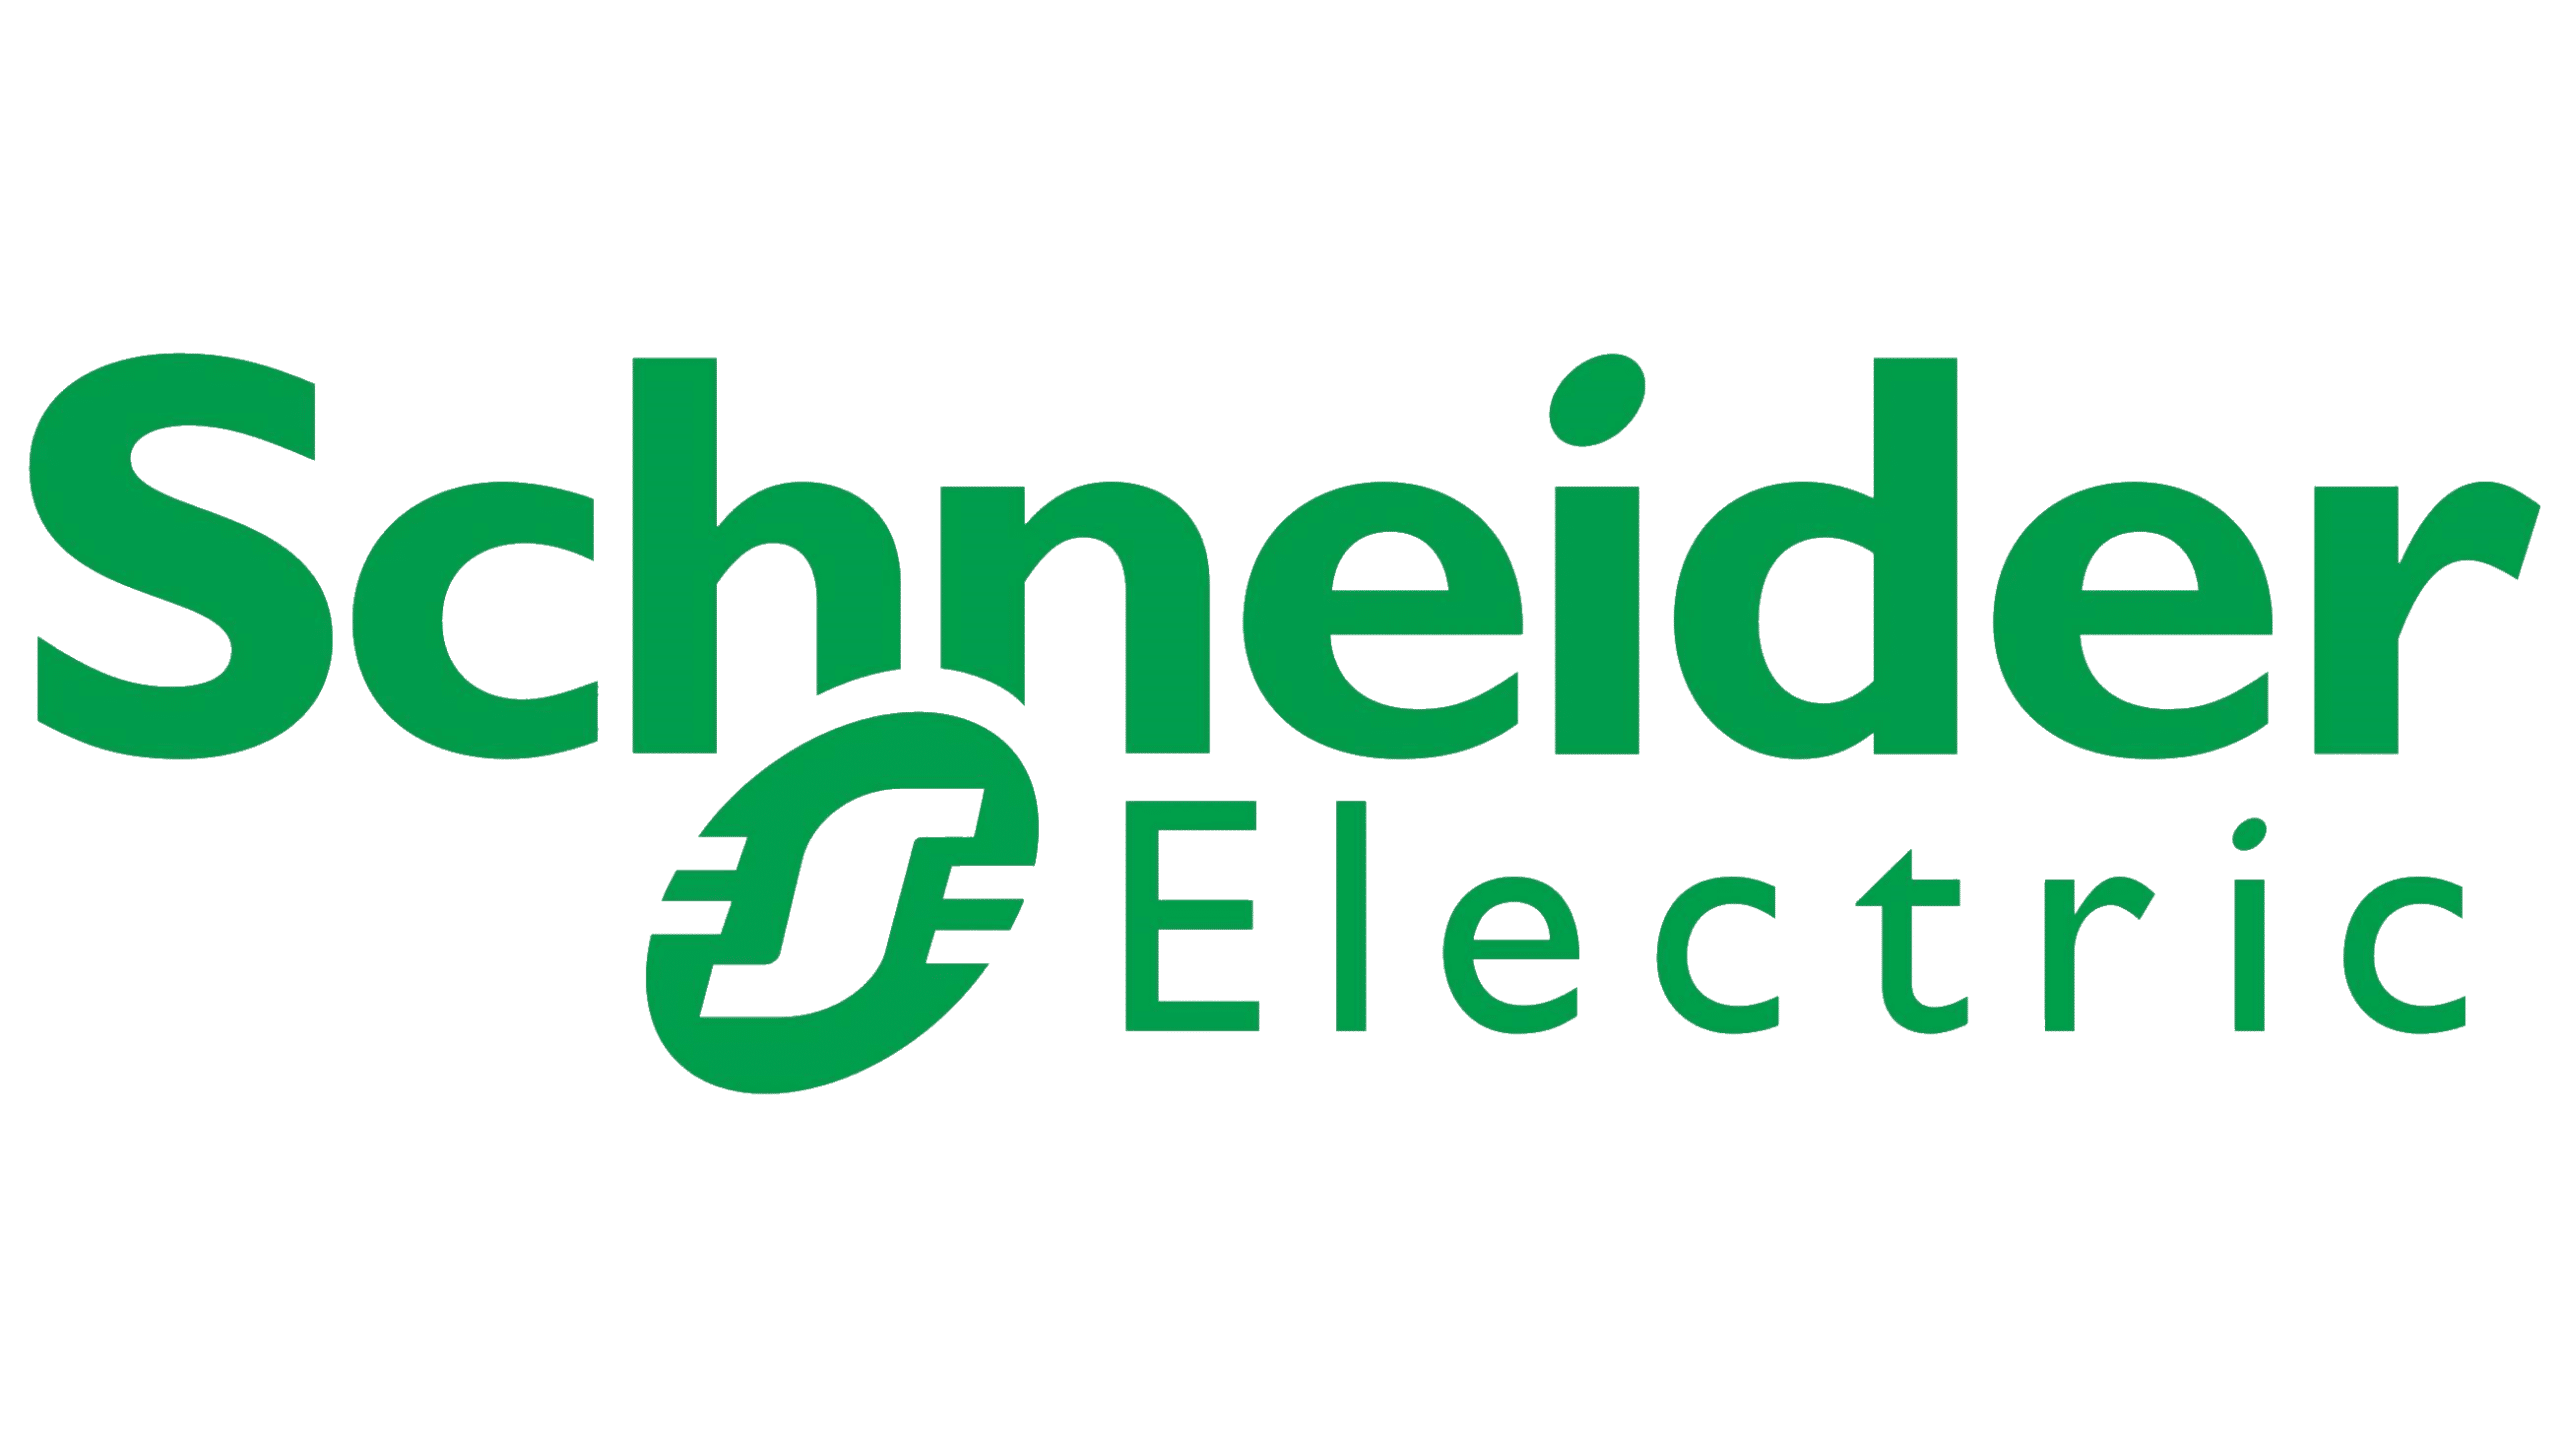 Schneider Electric joins ETIM International as fifth Global Industry Member